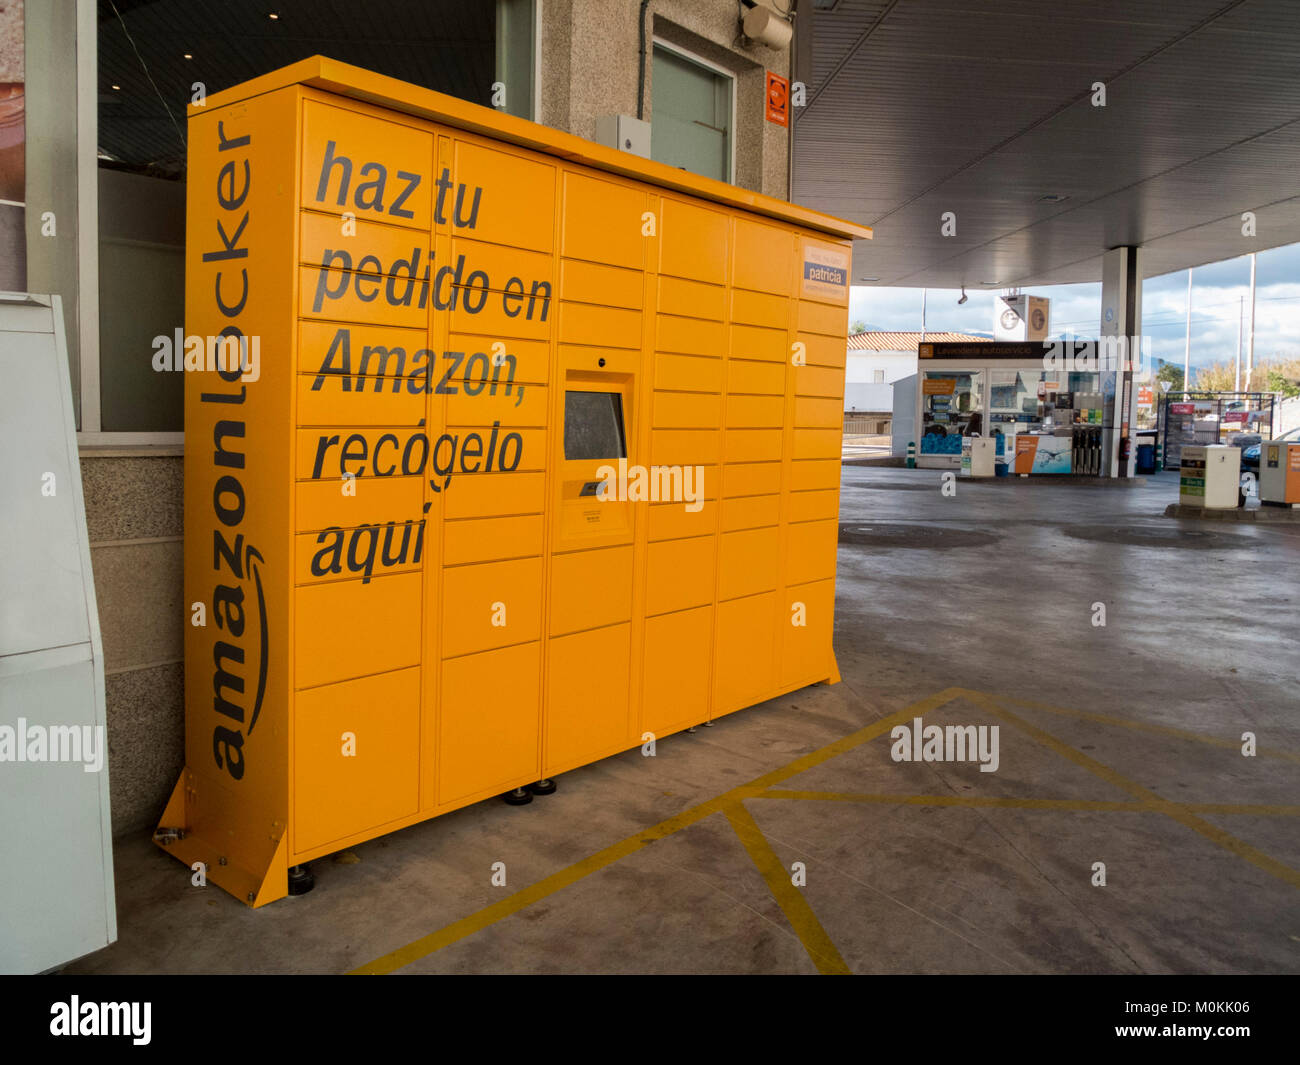 Amazon Locker in gas station in Altea, Alicante, Spain Stock Photo - Alamy